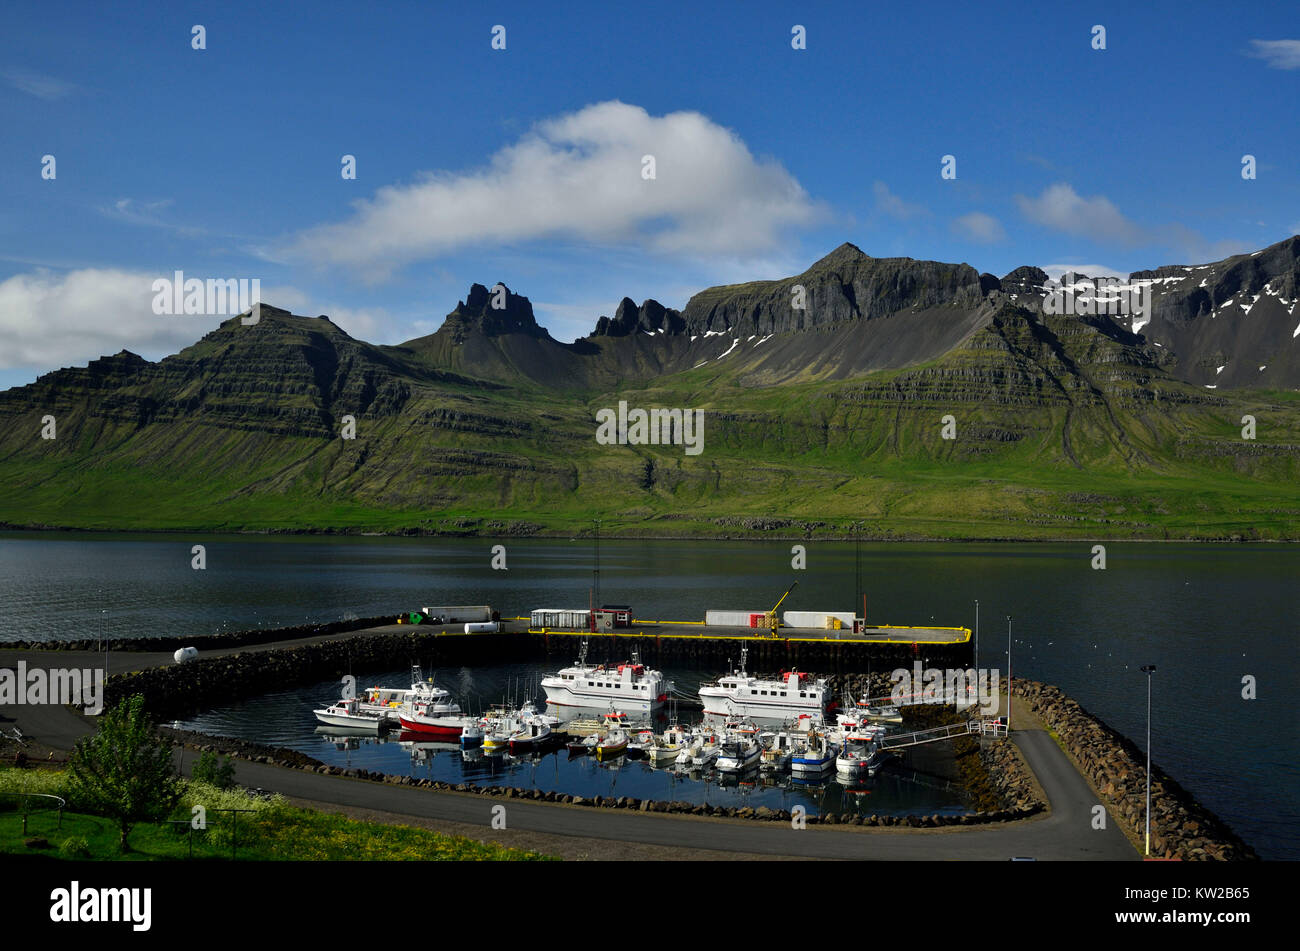 L'Islanda, porto di Stodvadsfjordur nel fiordo Stodvar sulla costa est, Isola, Hafen Stodvadsfjordur am Fjord Stodvar an der Ostküste Foto Stock